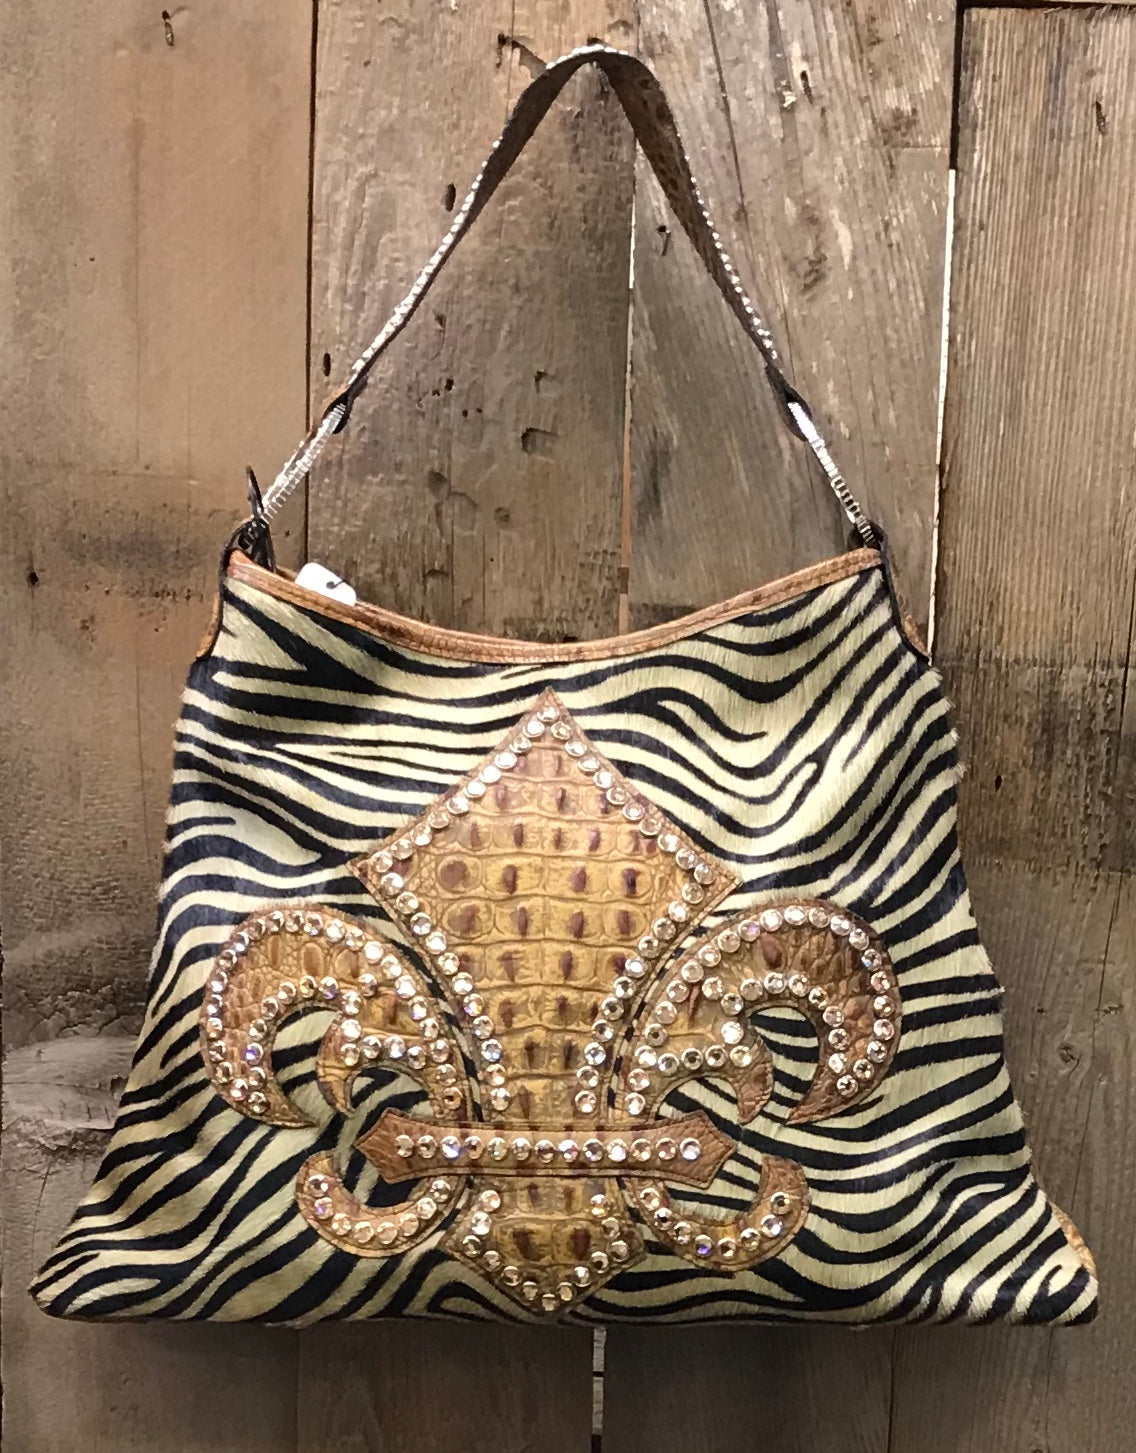 Leopard - Cheetah - Animal Print - Faux Fur - Tote Bag - Purse - Handbag